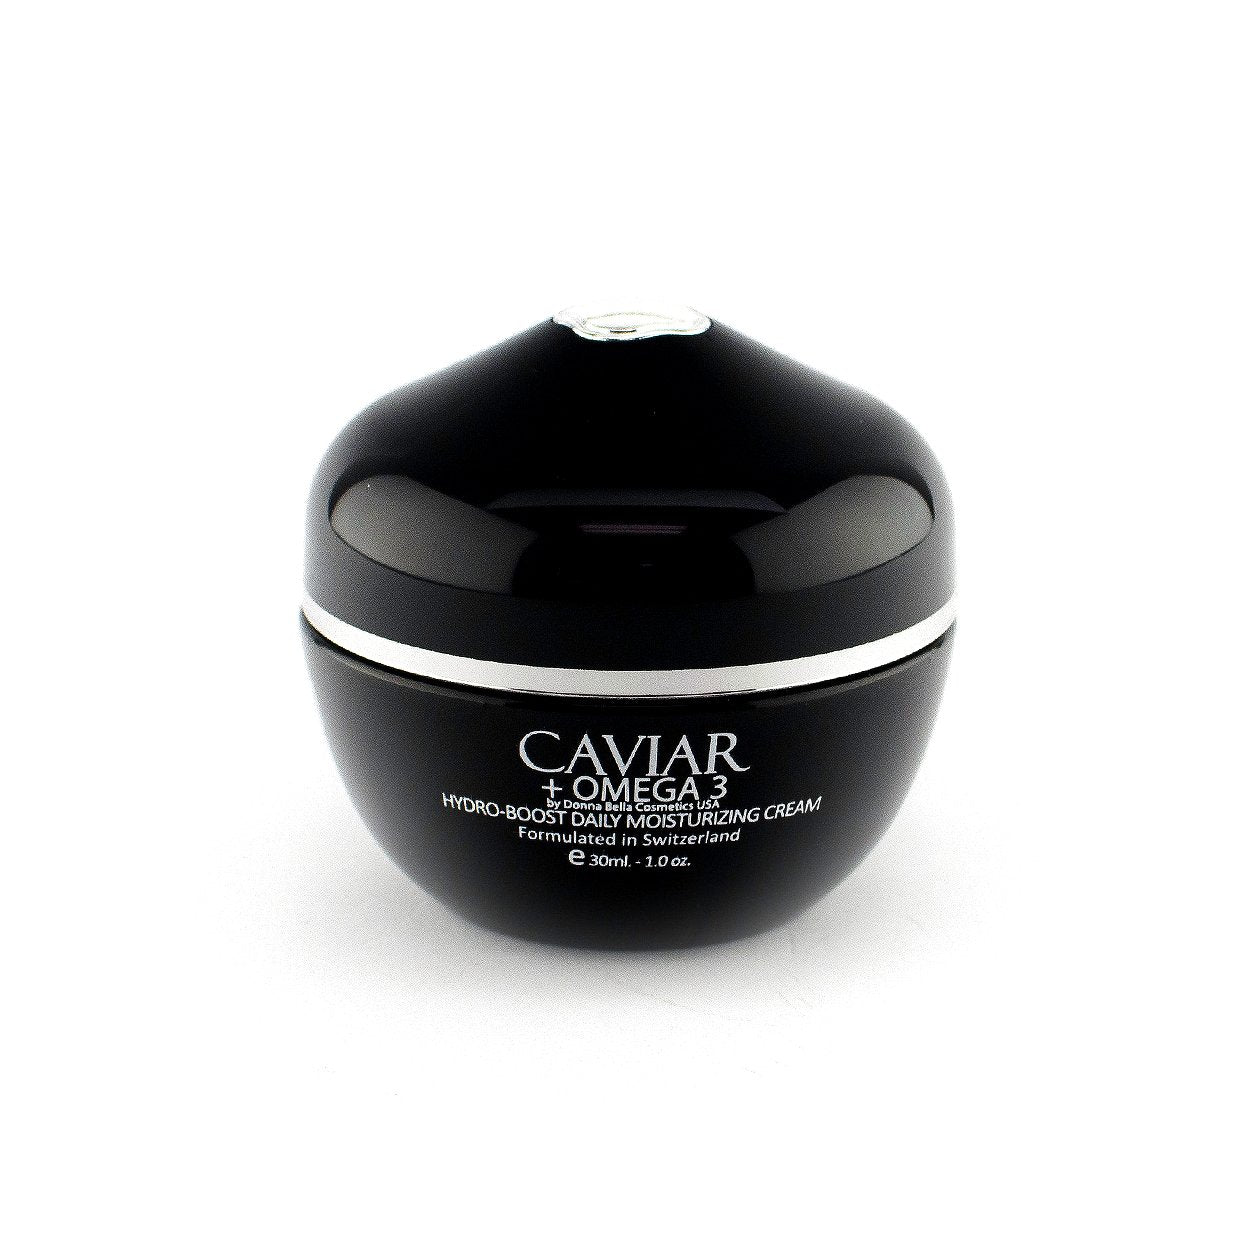 Nighttime Healing | DMAE | Collagen | Marine Collagen | Moisturizing | Caviar | Skin care | Cosmetics | Luxury Skincare | Hydro-Boost | Fast Absorbing | Healing | Deep Cleaning